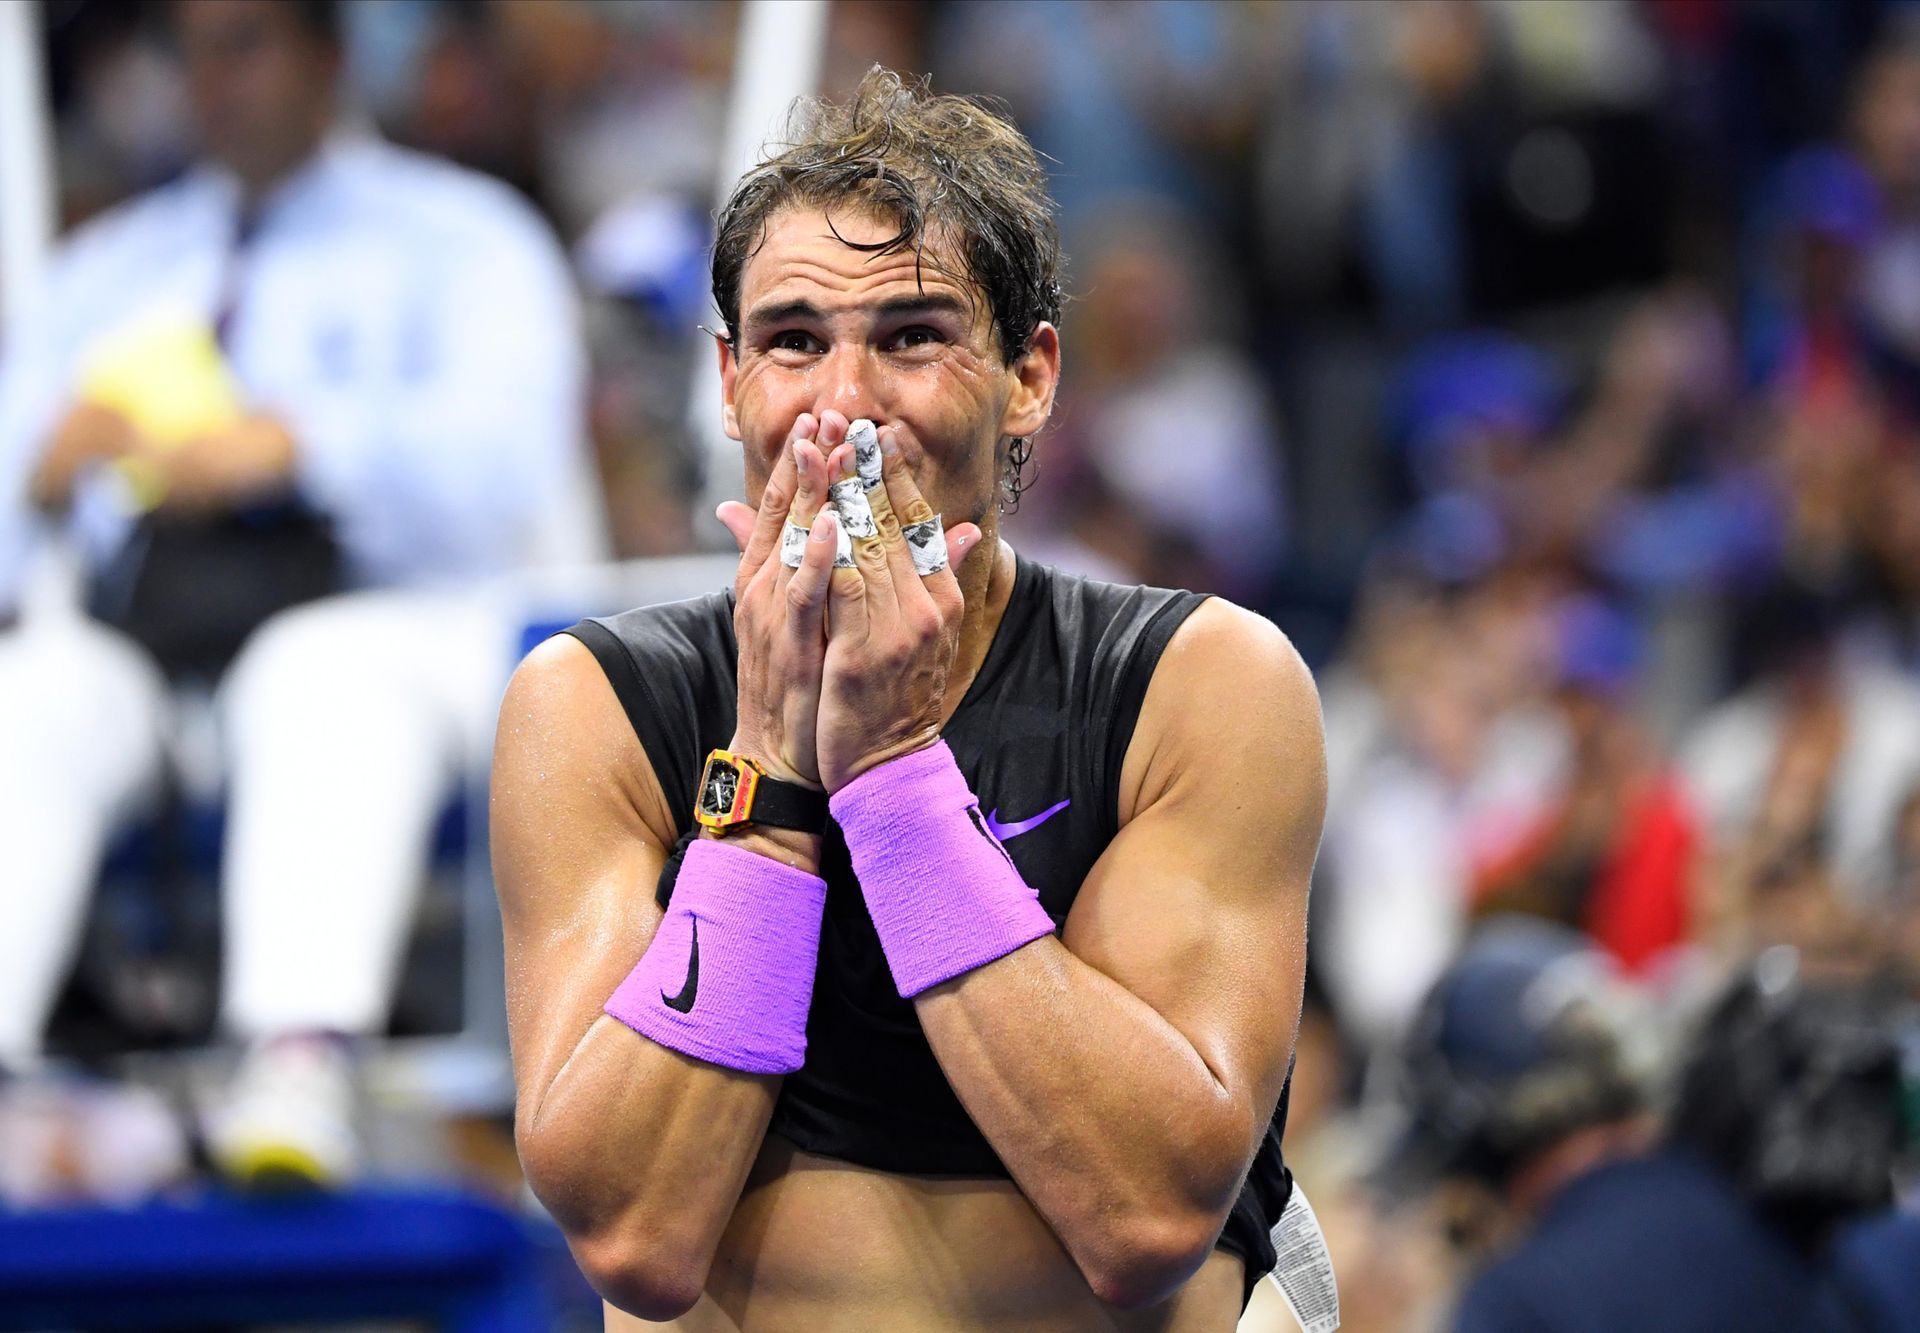 Rafael Nadal vs. Daniil Medveděv, finále US Open 2019